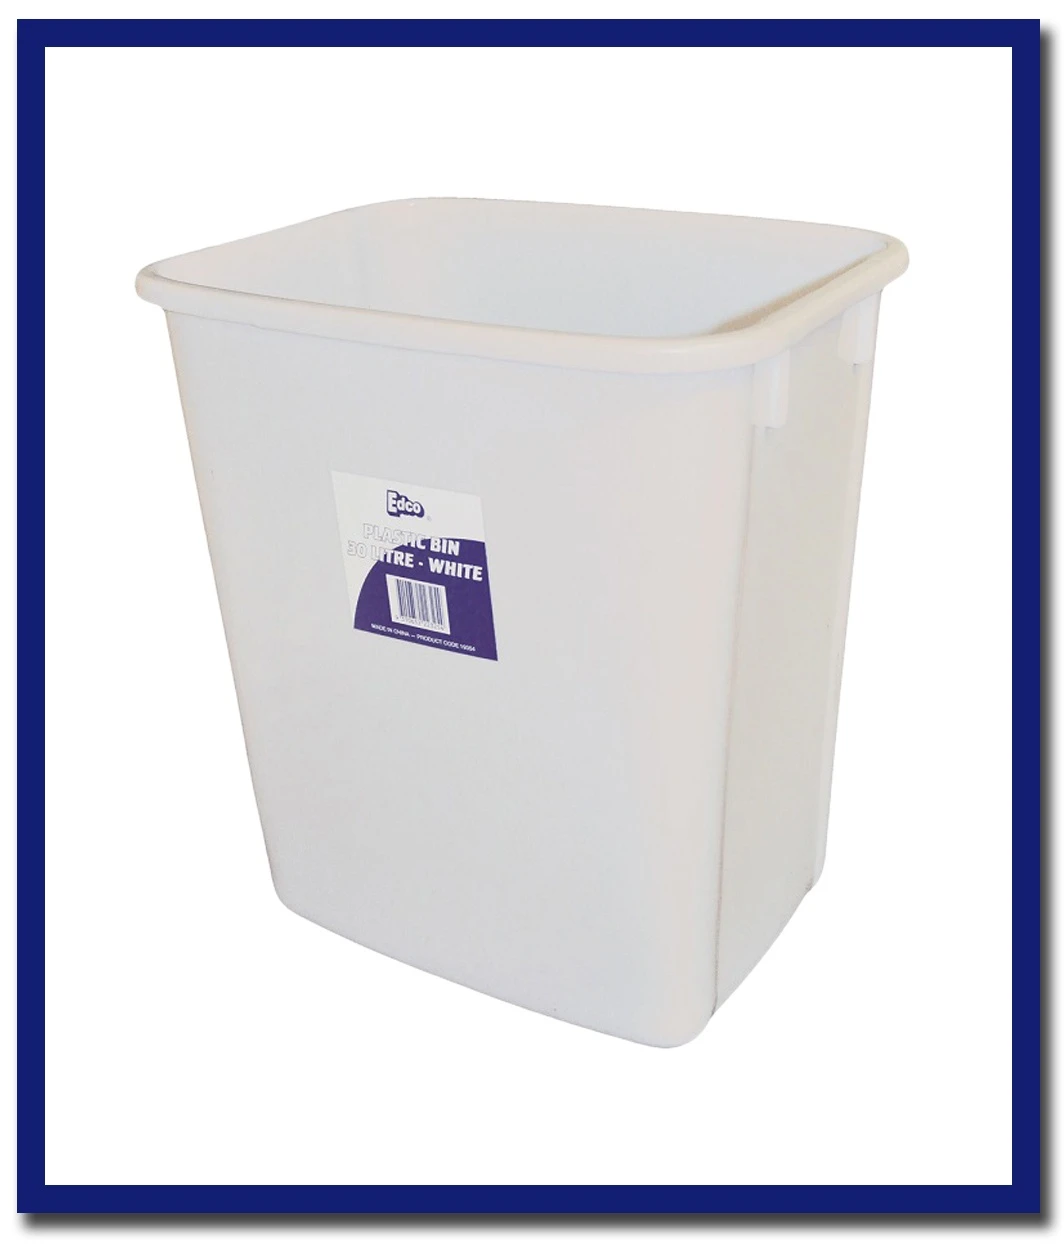 Edco Plastic Bin White - 1 Unit - Stone Doctor Australia - Cleaning Accessories > Office Bins > Plastic Bin